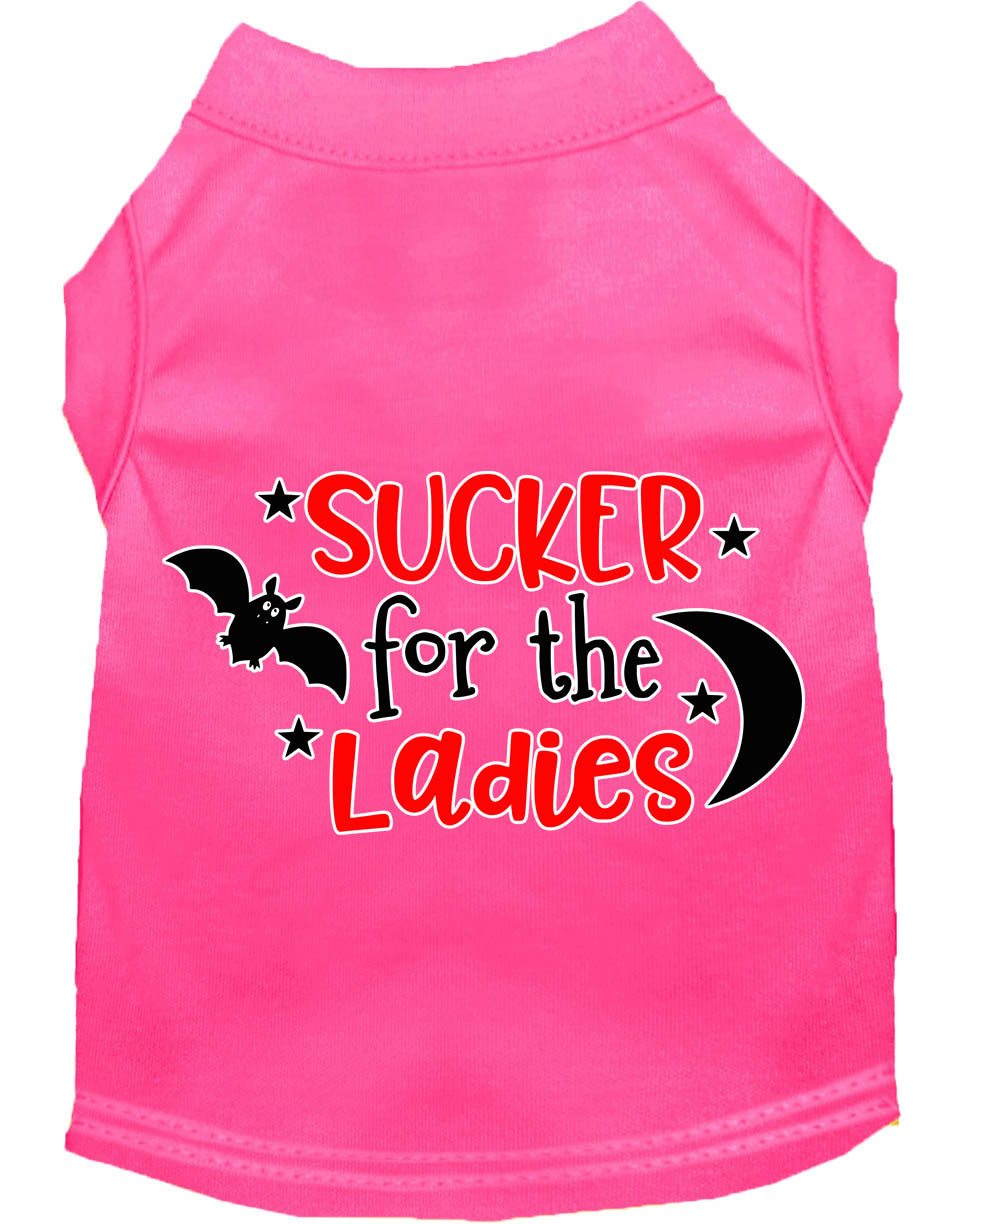 Sucker for the Ladies Screen Print Dog Shirt Bright Pink Lg